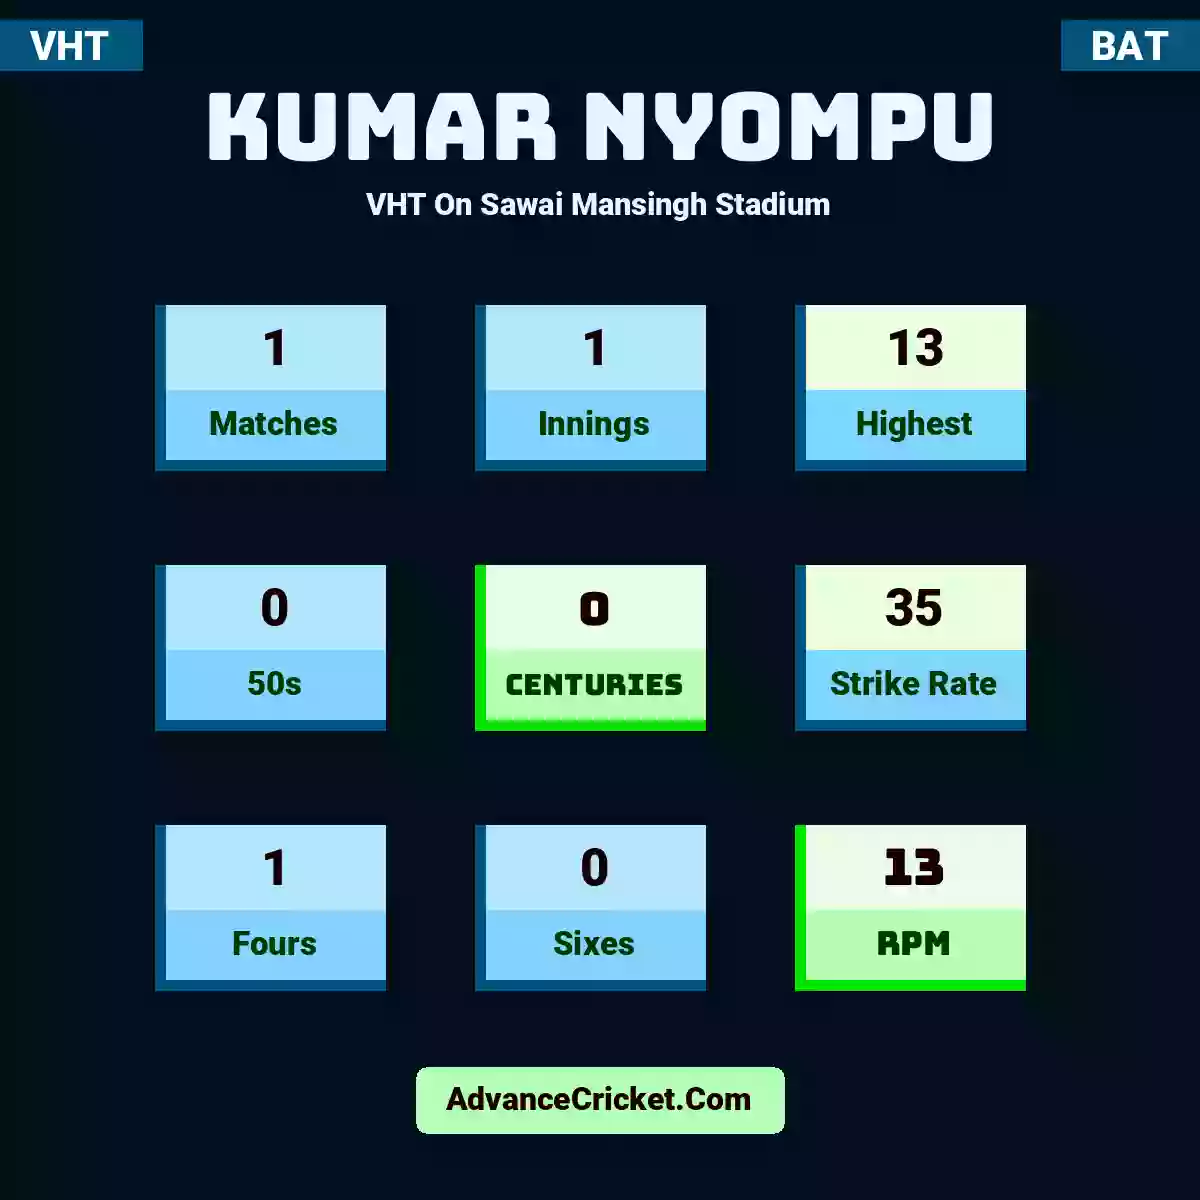 Kumar Nyompu VHT  On Sawai Mansingh Stadium, Kumar Nyompu played 1 matches, scored 13 runs as highest, 0 half-centuries, and 0 centuries, with a strike rate of 35. K.Nyompu hit 1 fours and 0 sixes, with an RPM of 13.